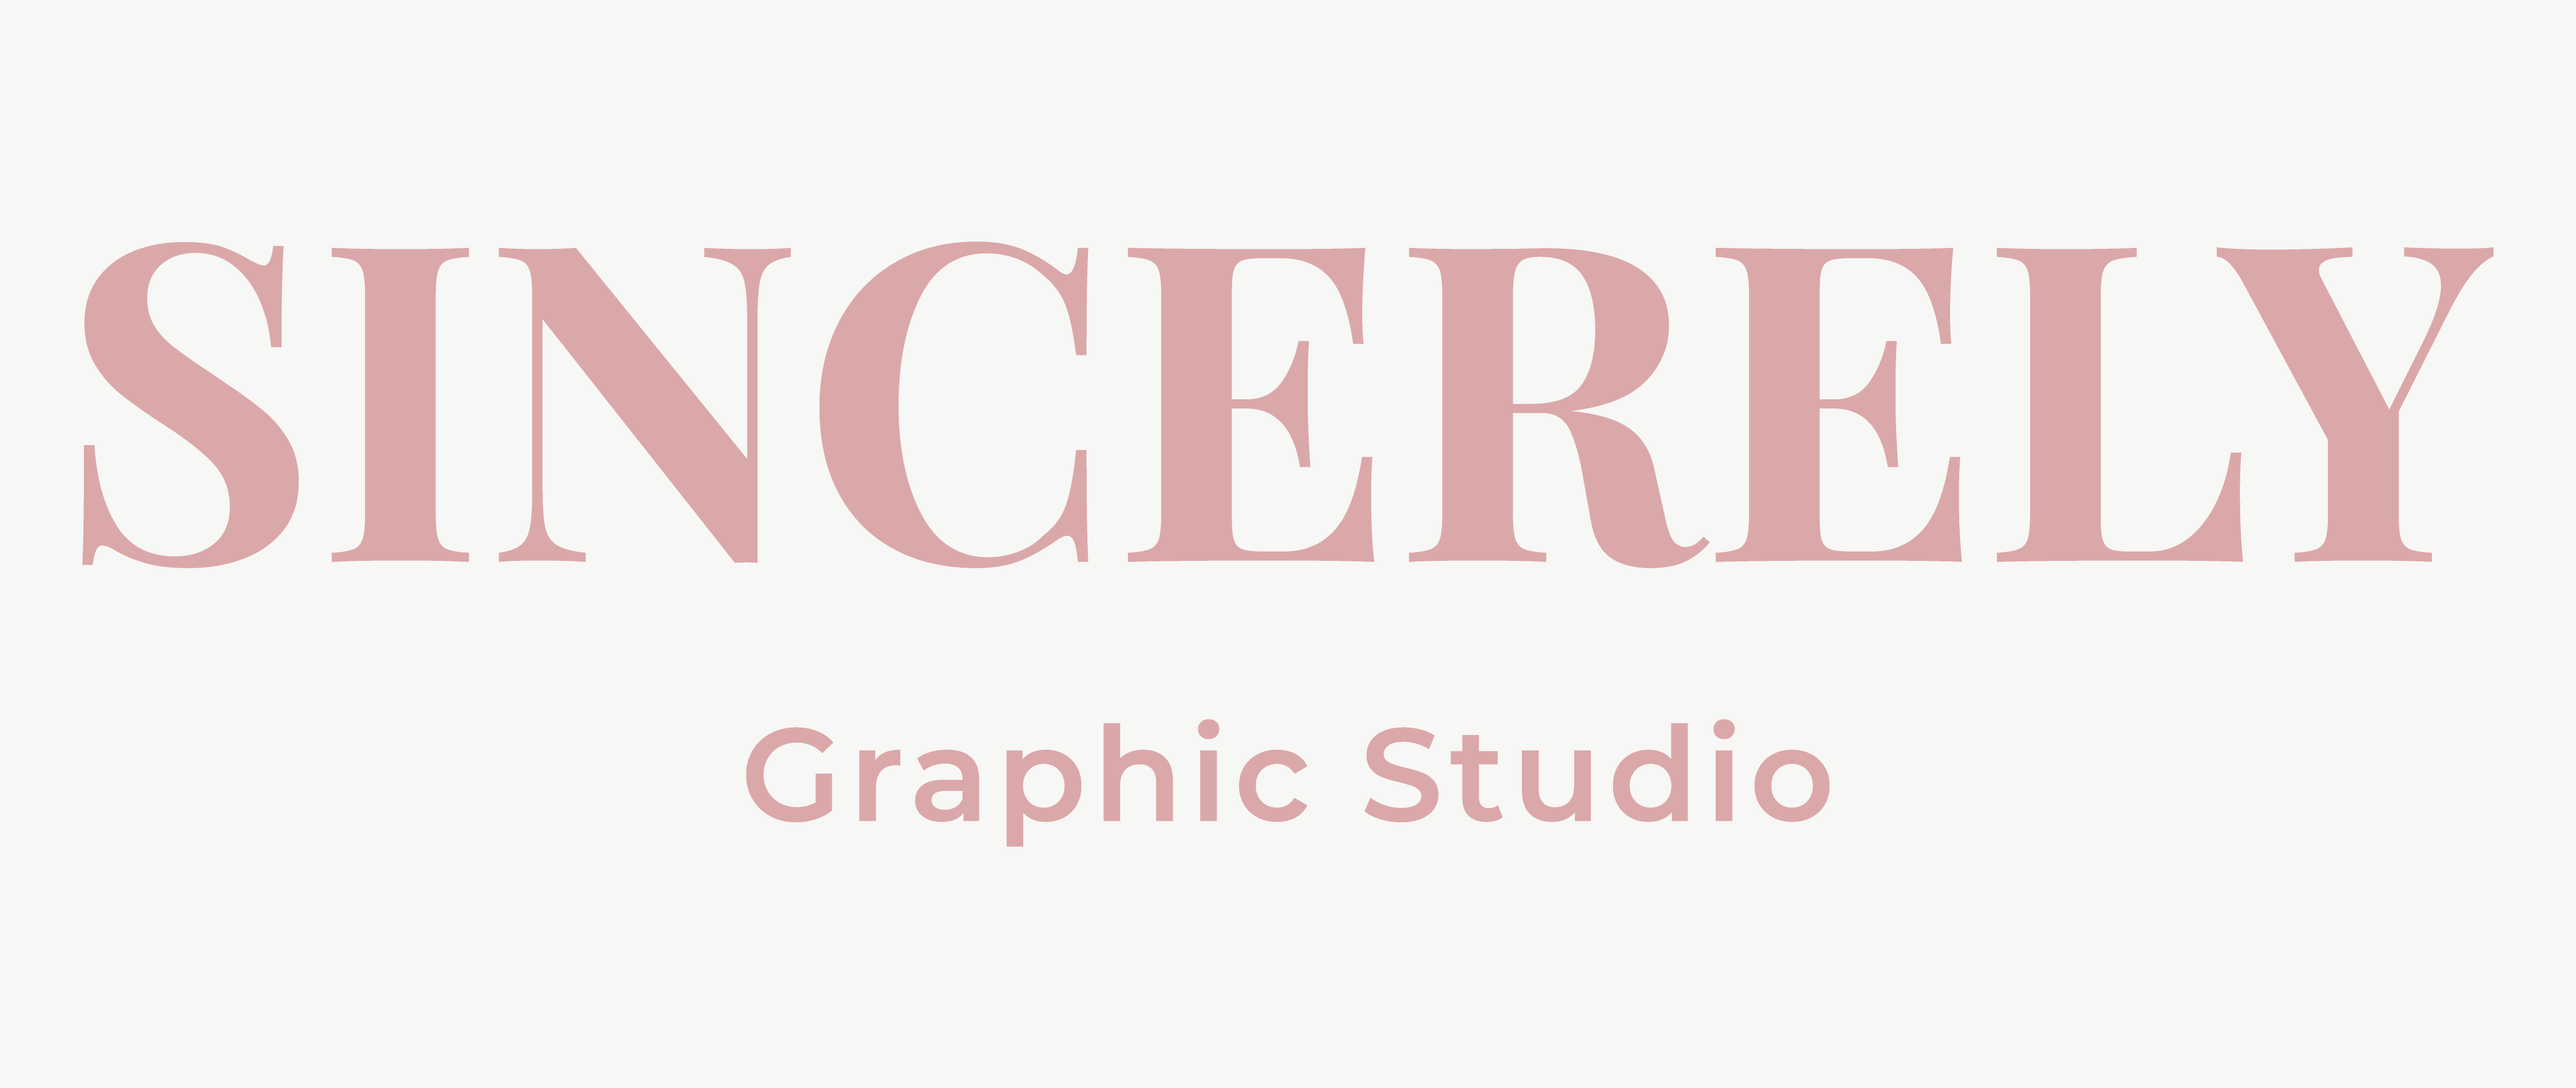 Sincerely graphic studio